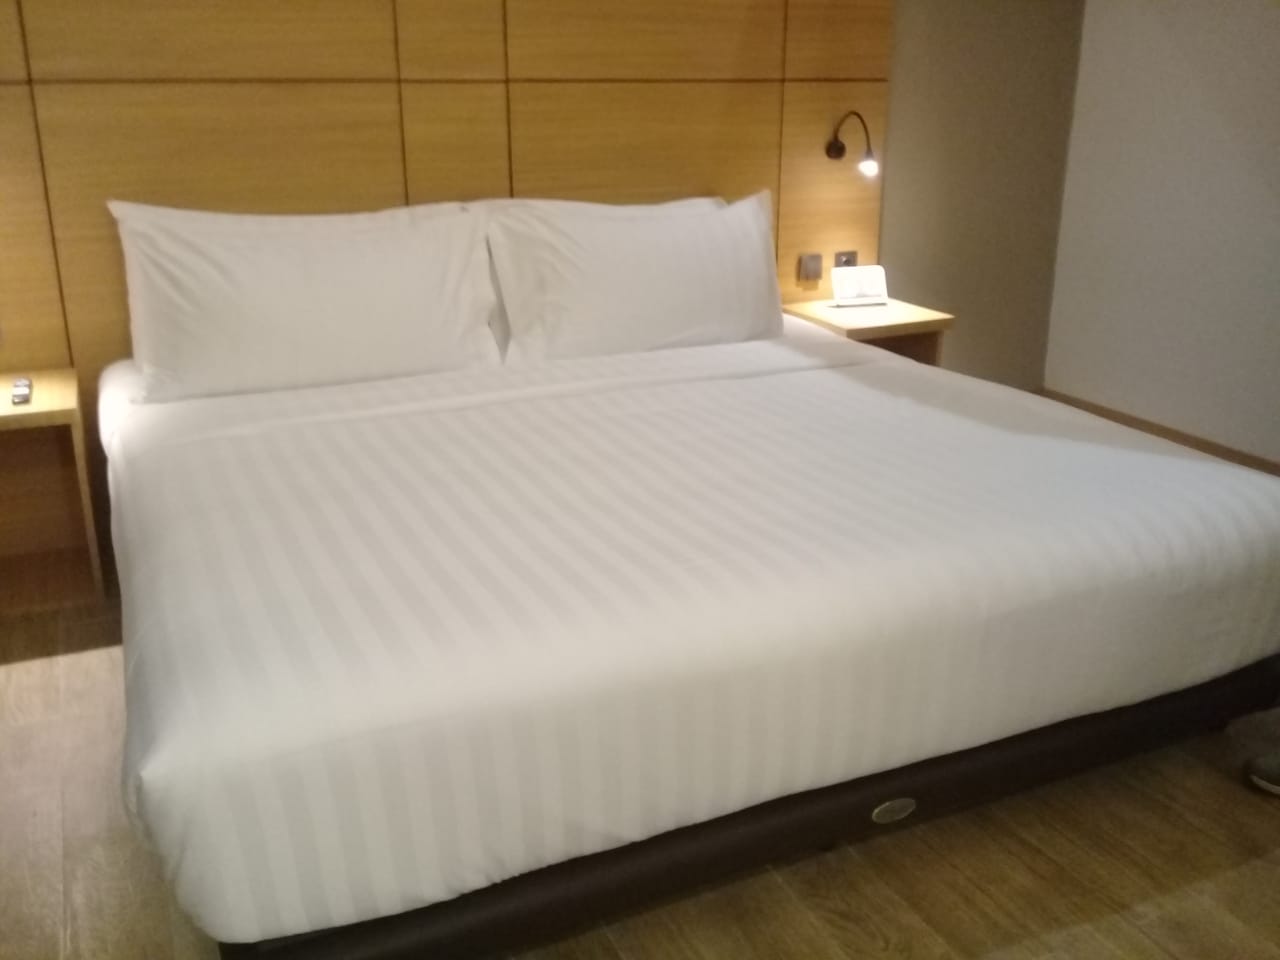 Ini kamar hotelnya dengan tarif sebesar Rp 1,8 juta/malam.